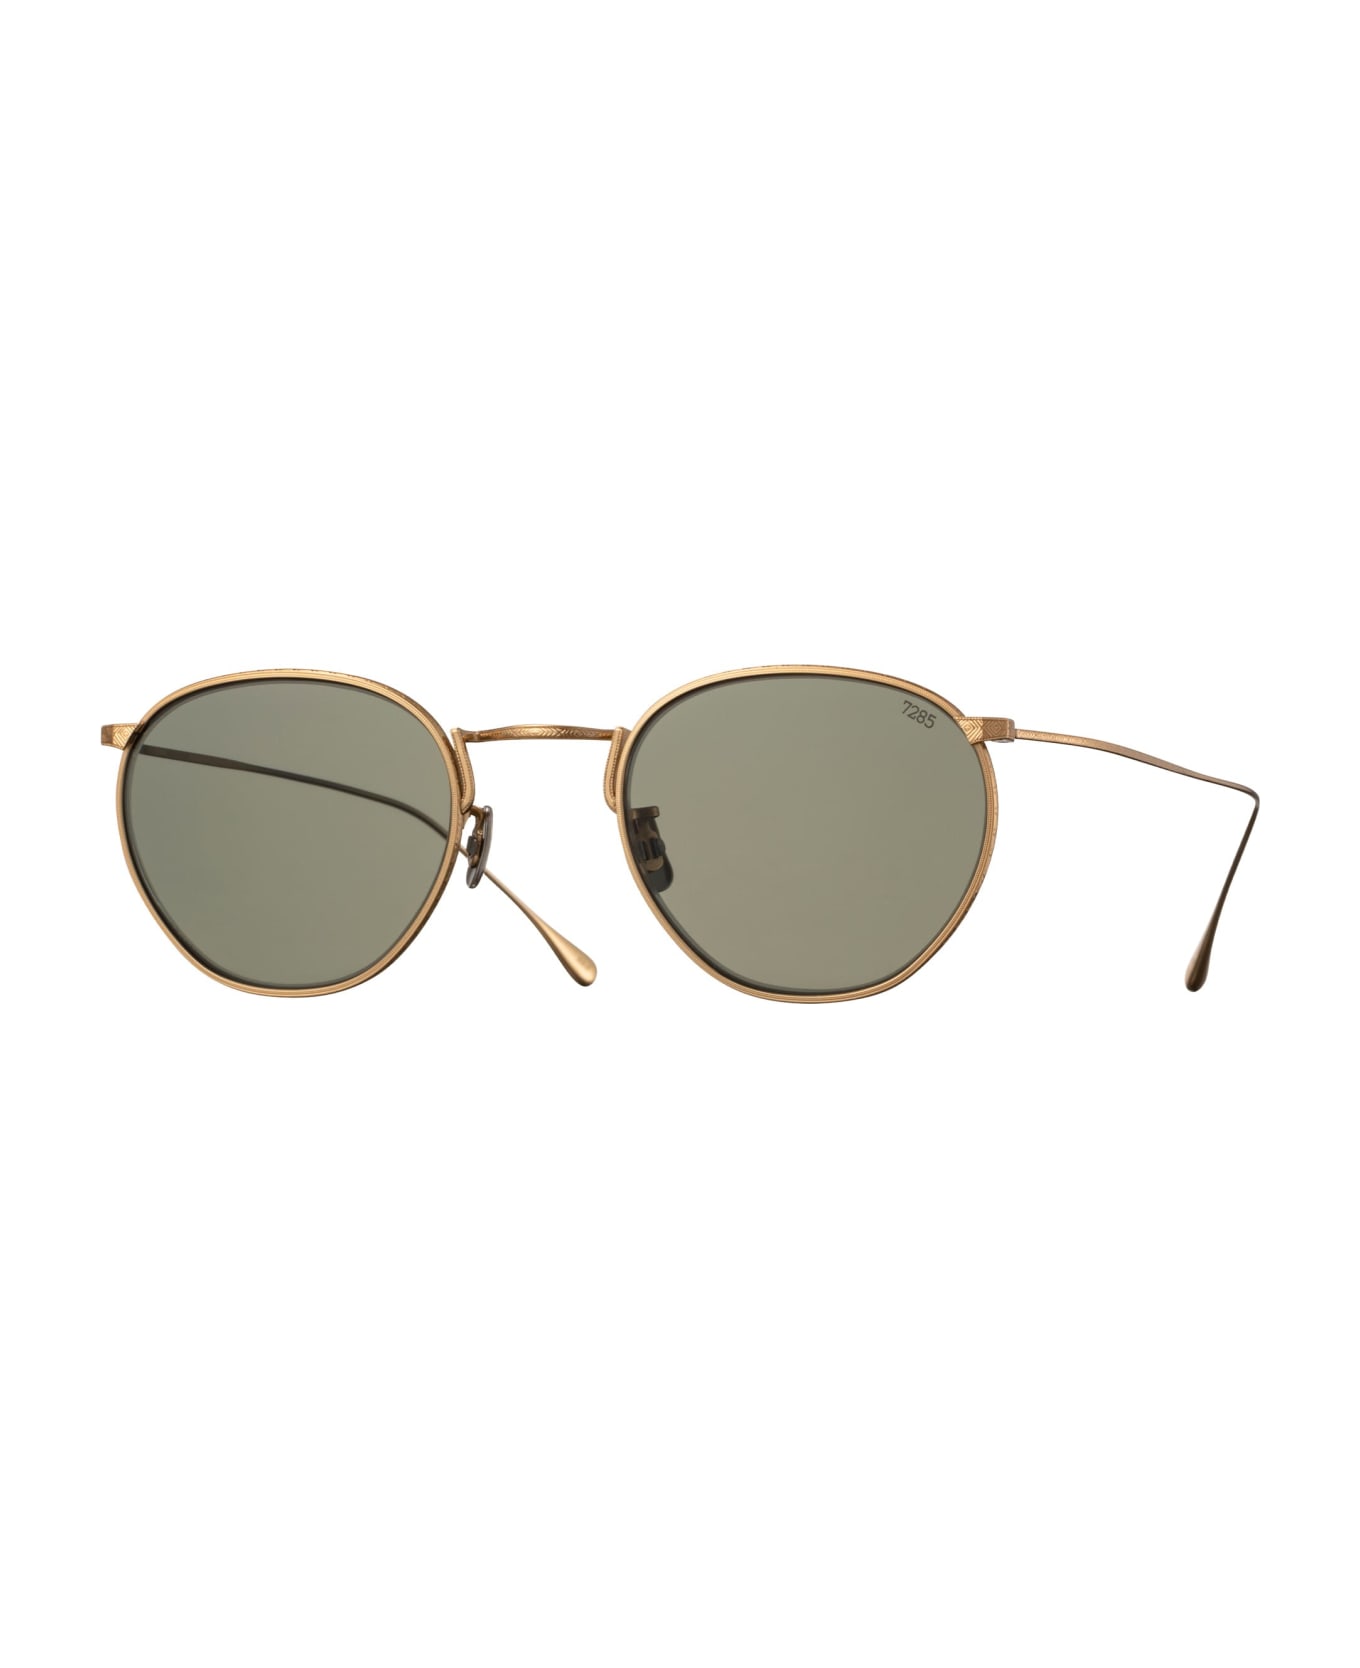 Eyevan 7285 188 - Antique Gold Sunglasses - Gold